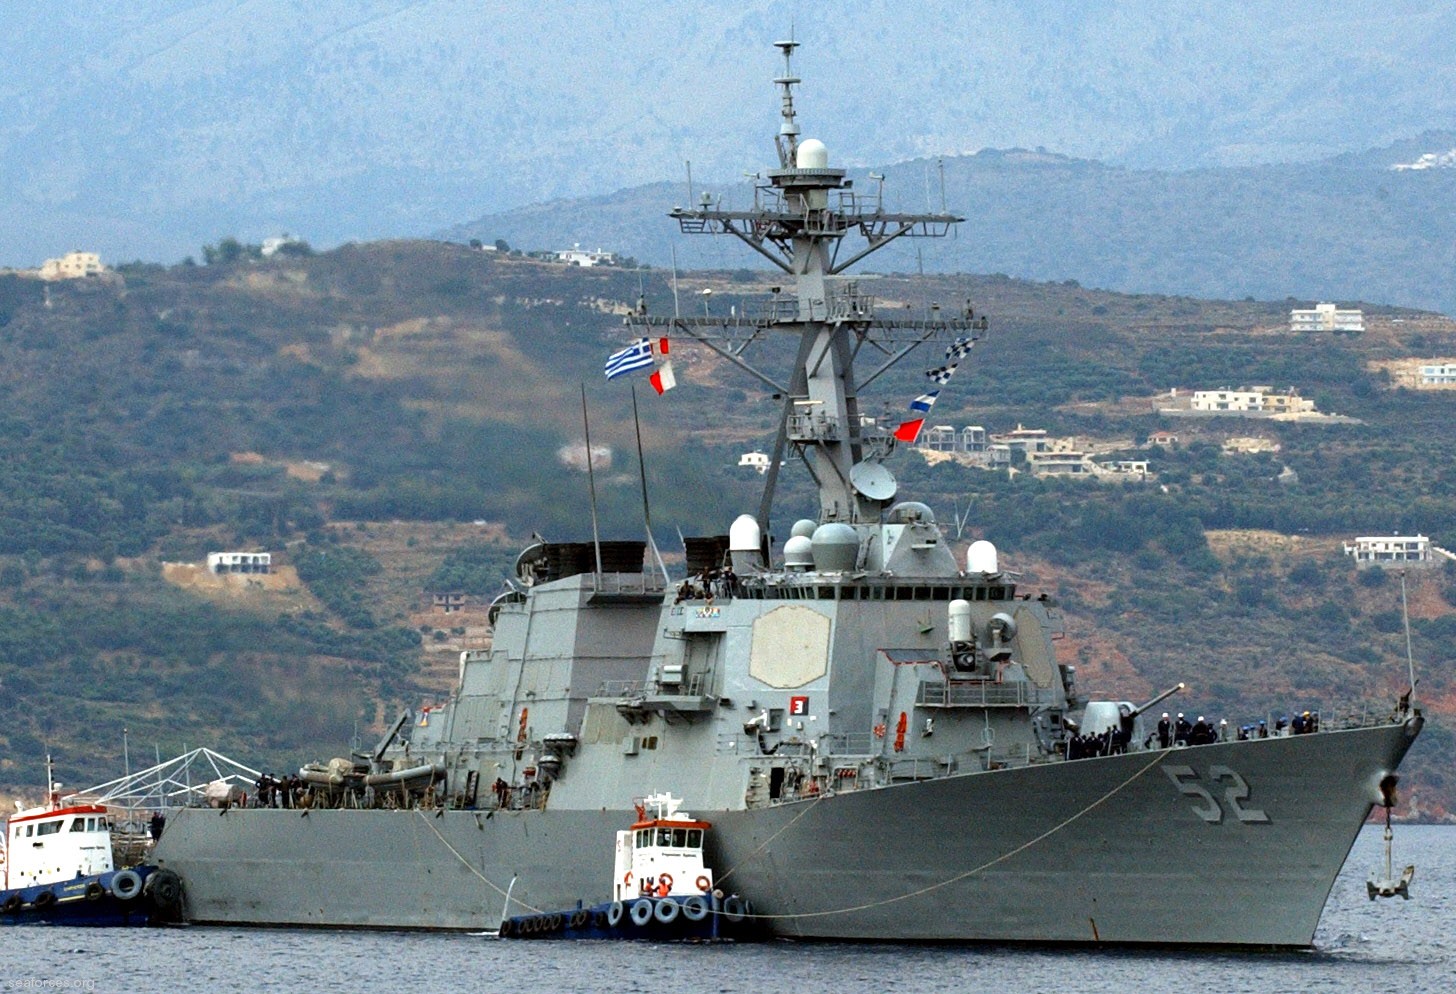 ddg-52 uss barry guided missile destroyer us navy 71